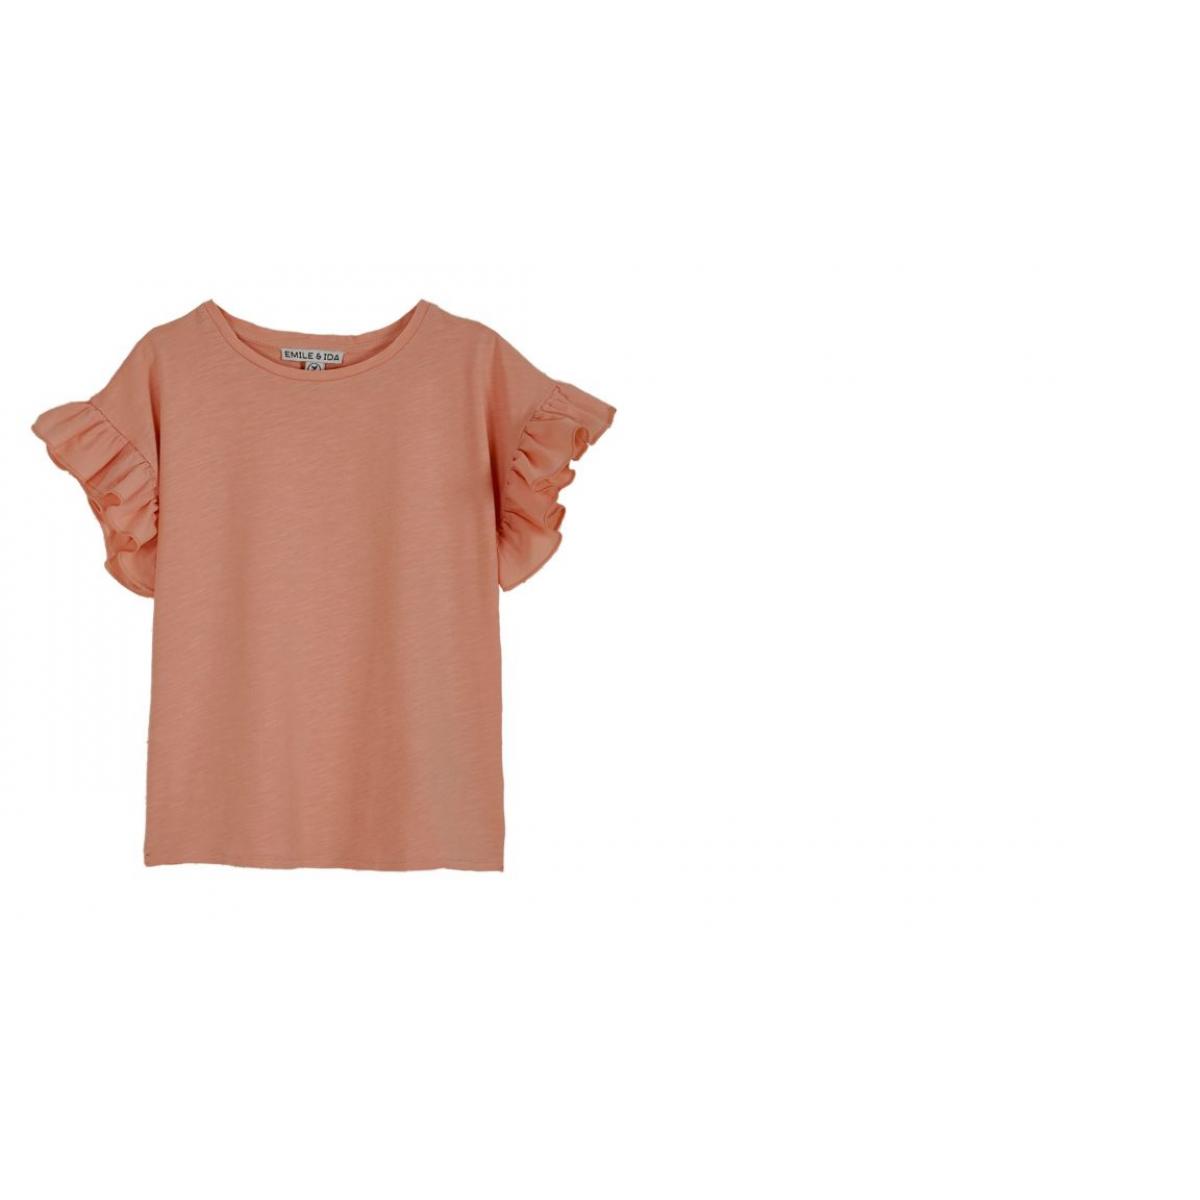 T-Shirt rose - Emile & Ida - 12 mois